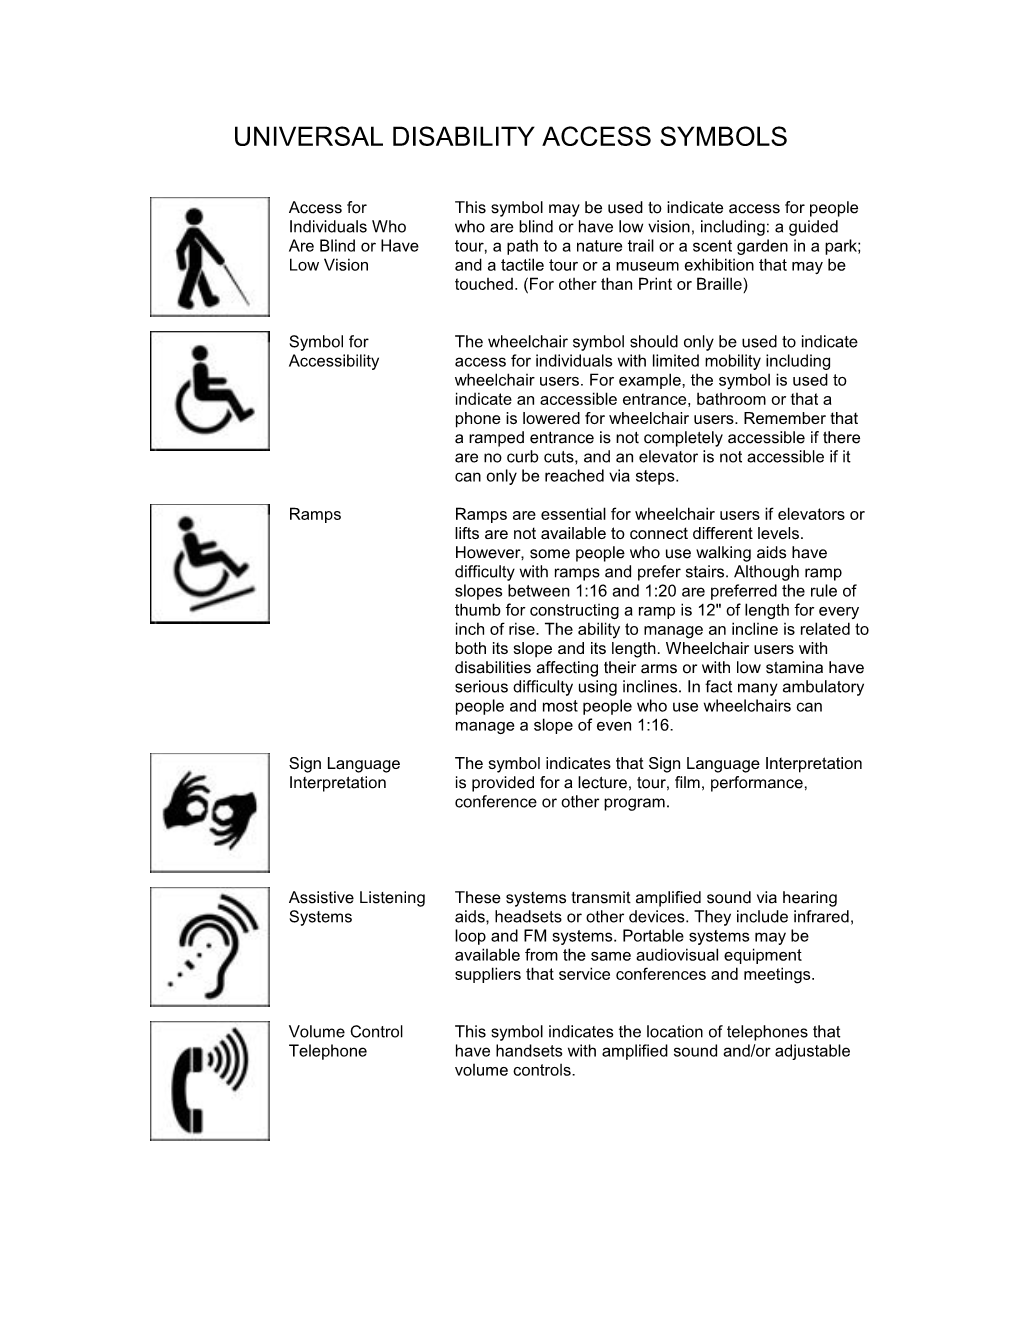 Universal Disability Access Symbols